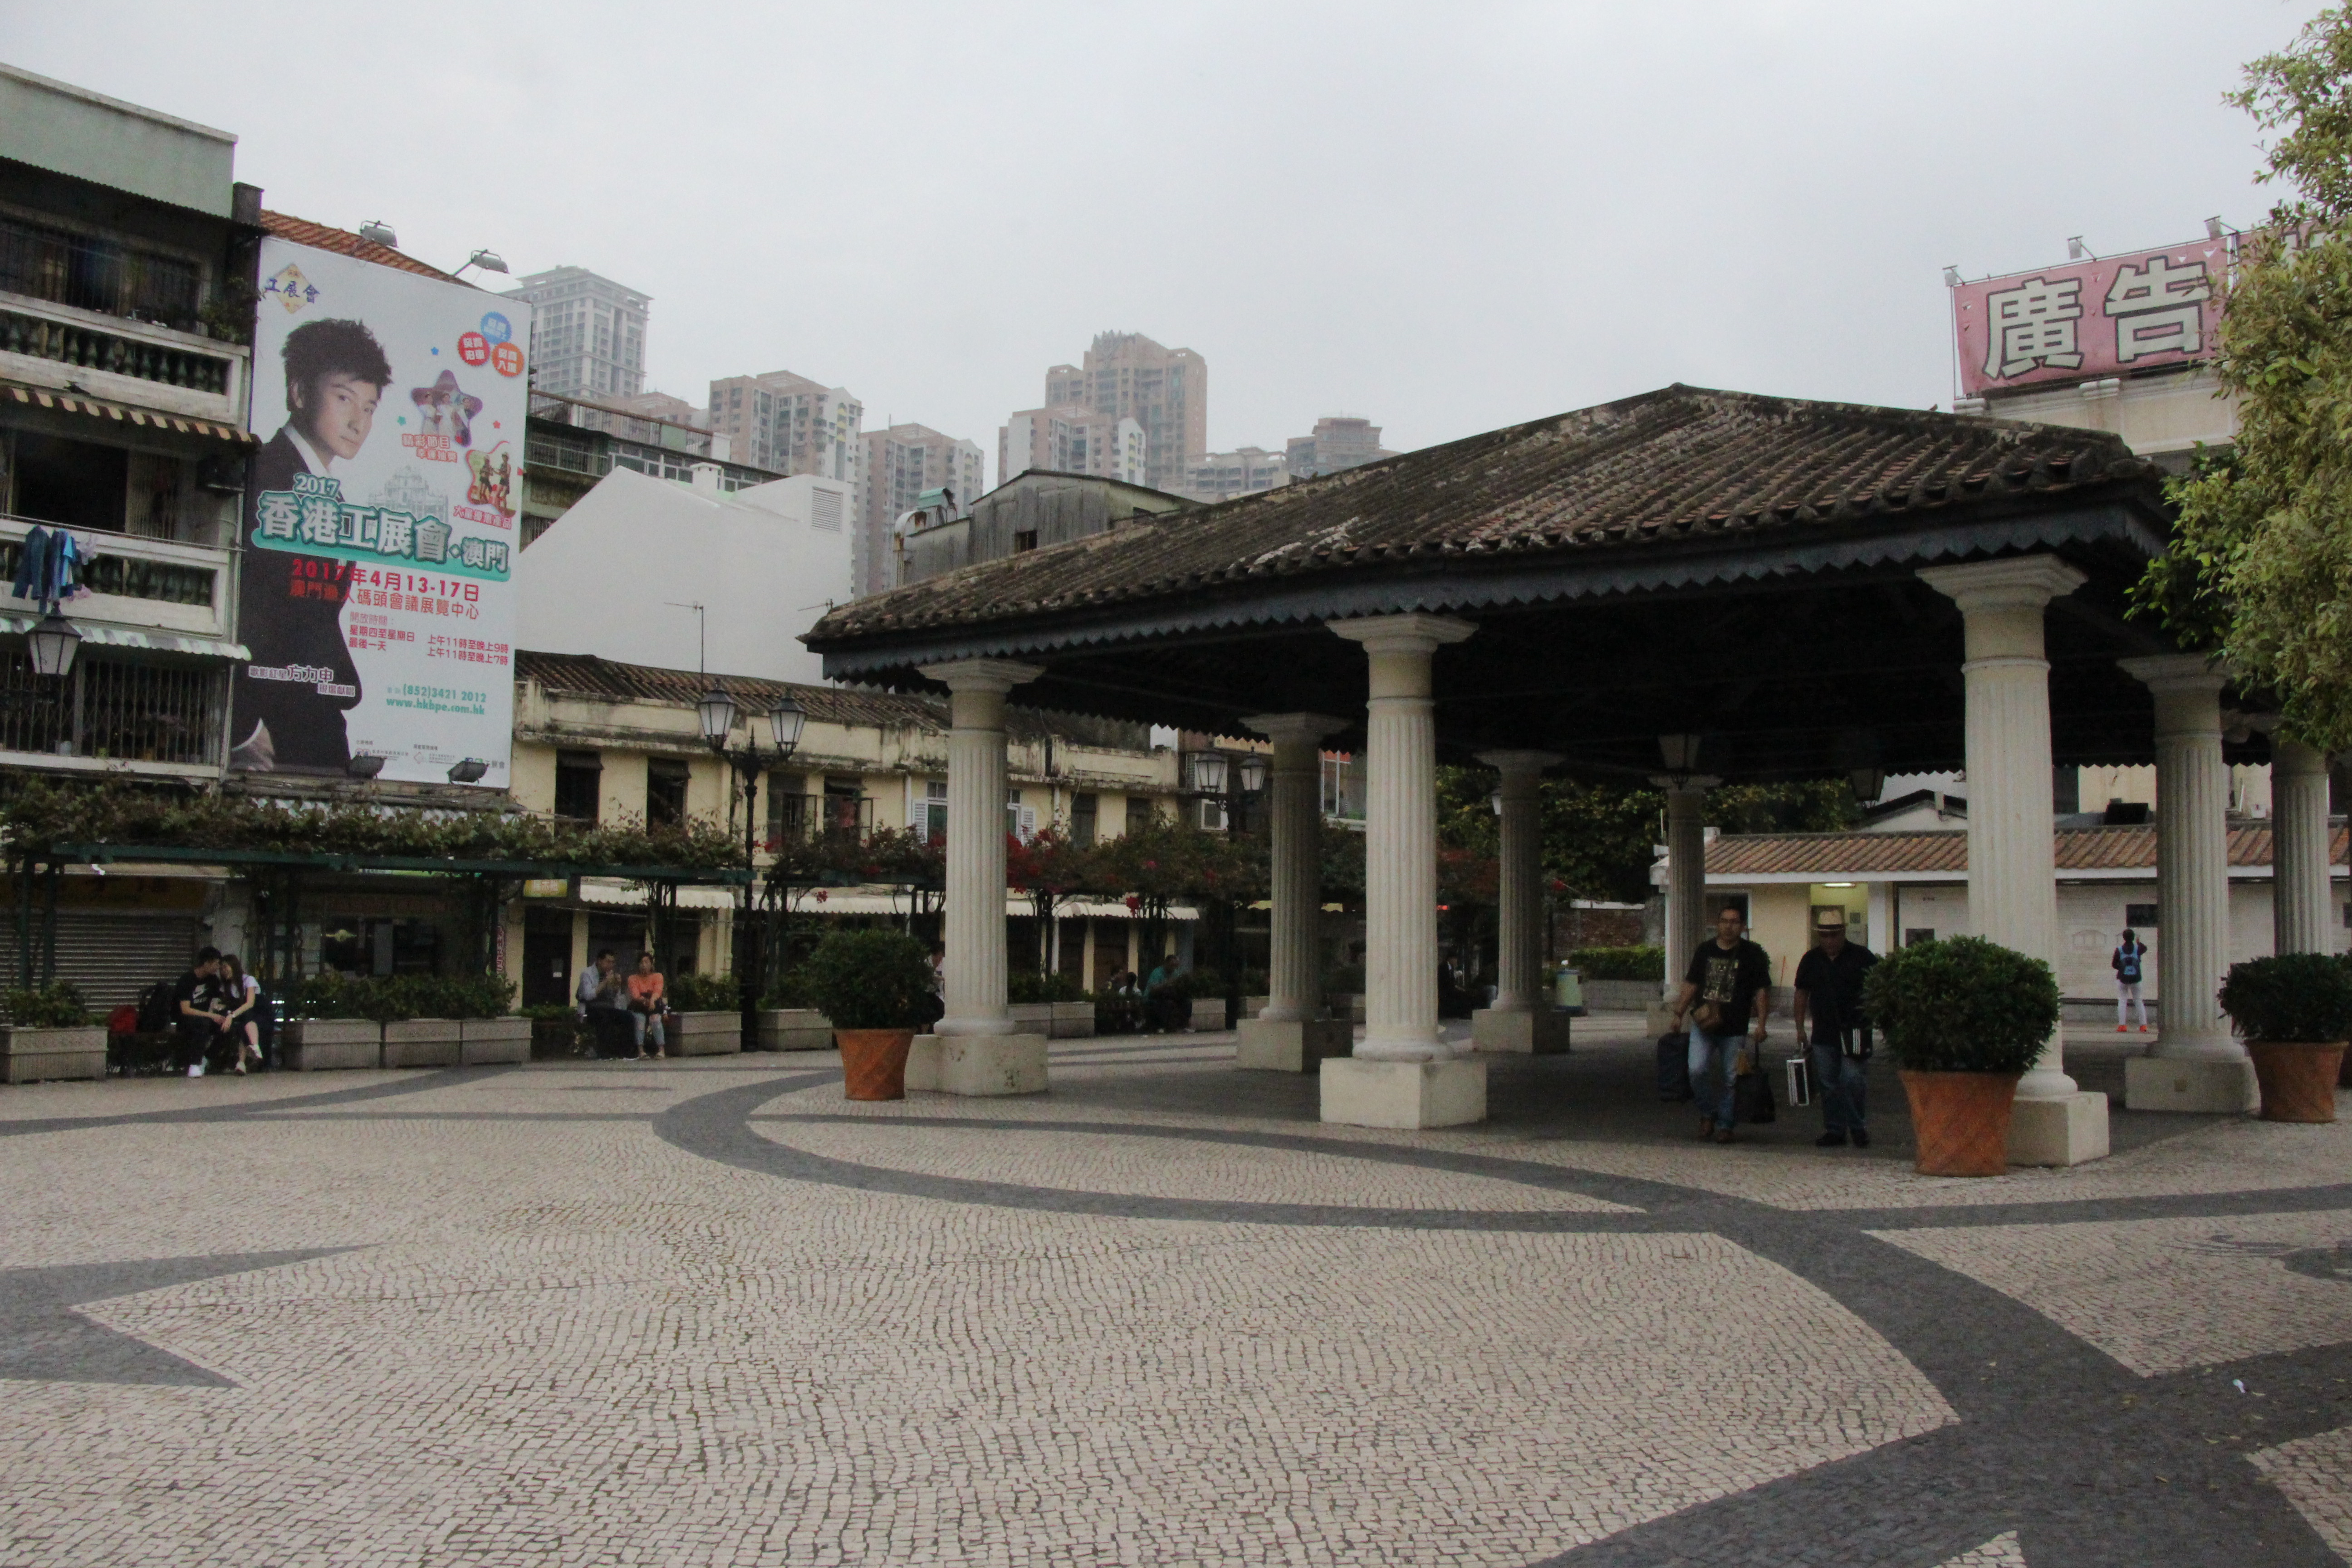 Rua do Cunha Macau: Square